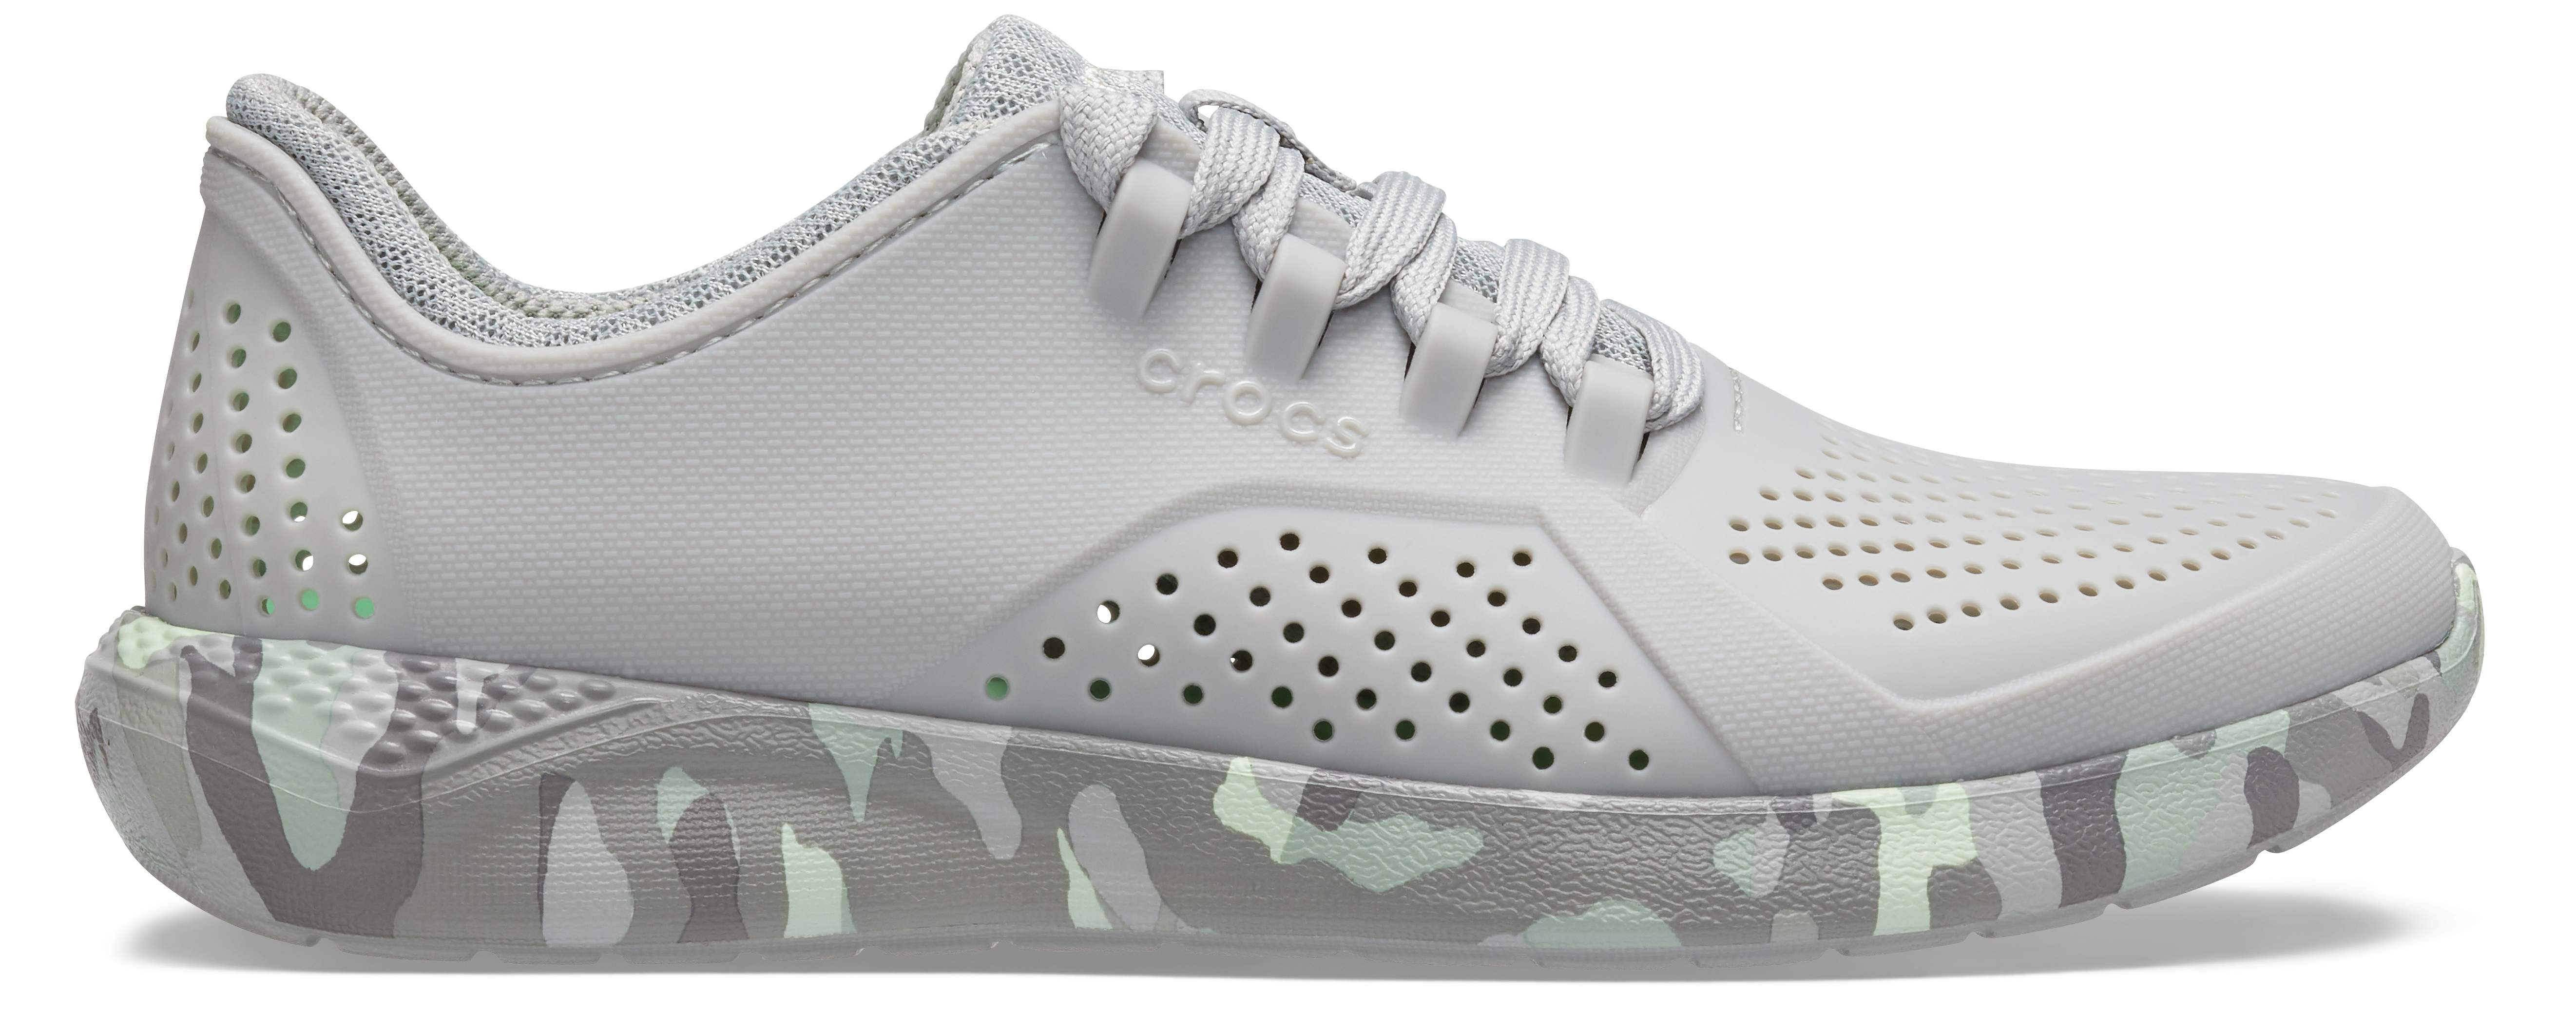 crocs women's tennis shoes